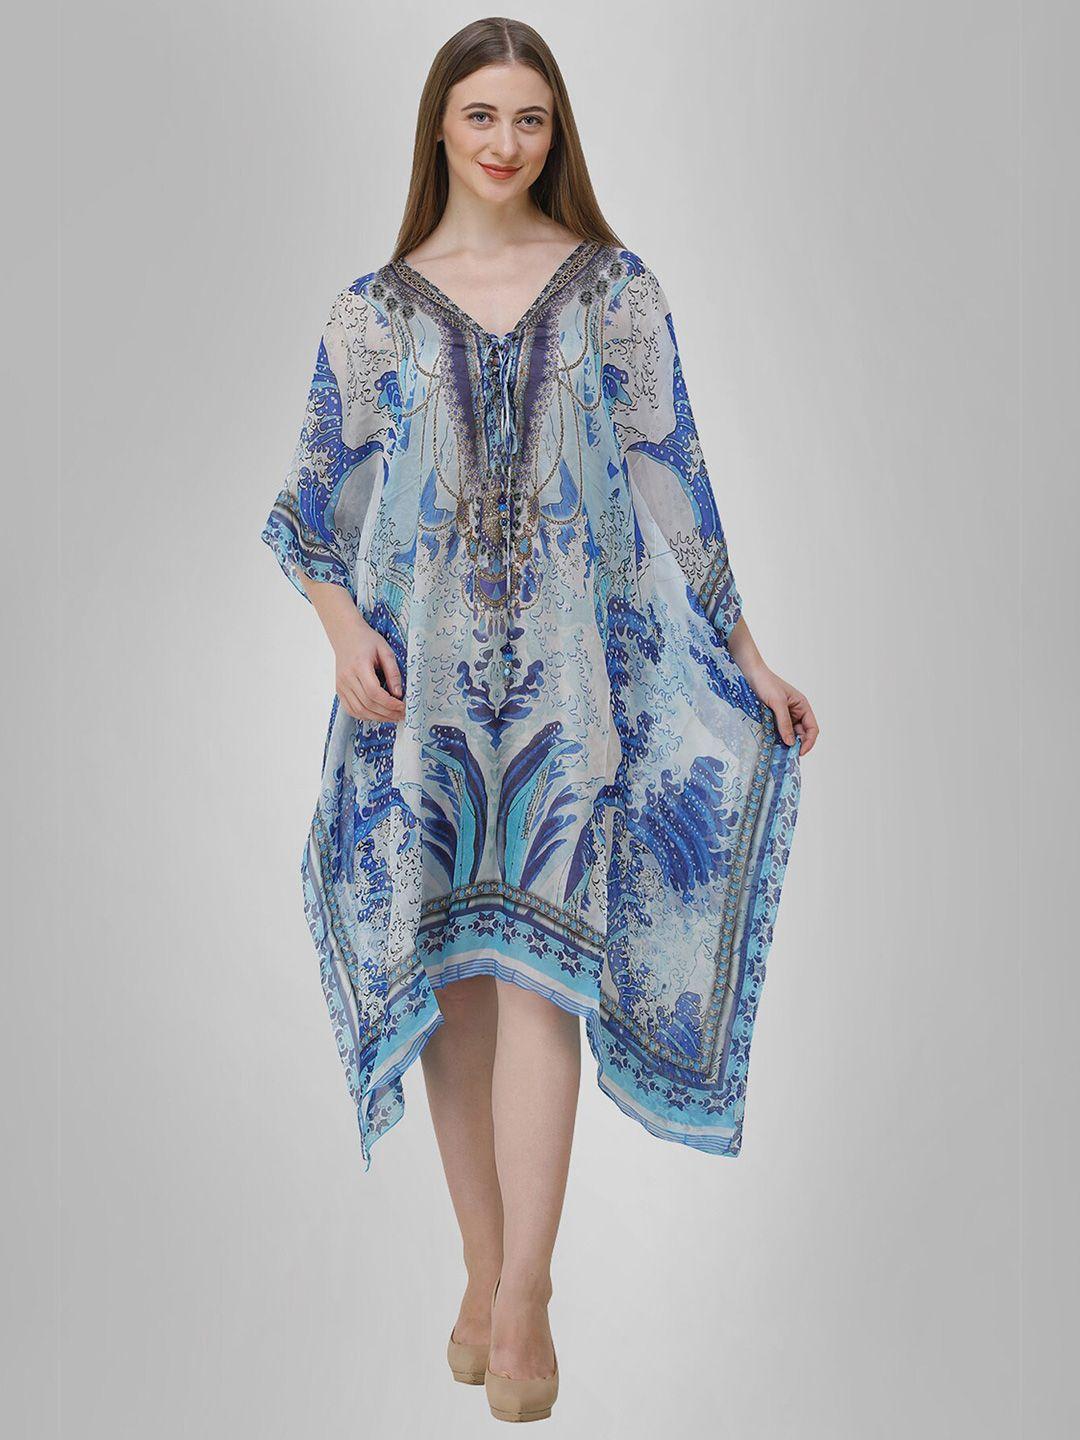 rajoria instyle white & blue ethnic motifs georgette ethnic kaftan dress